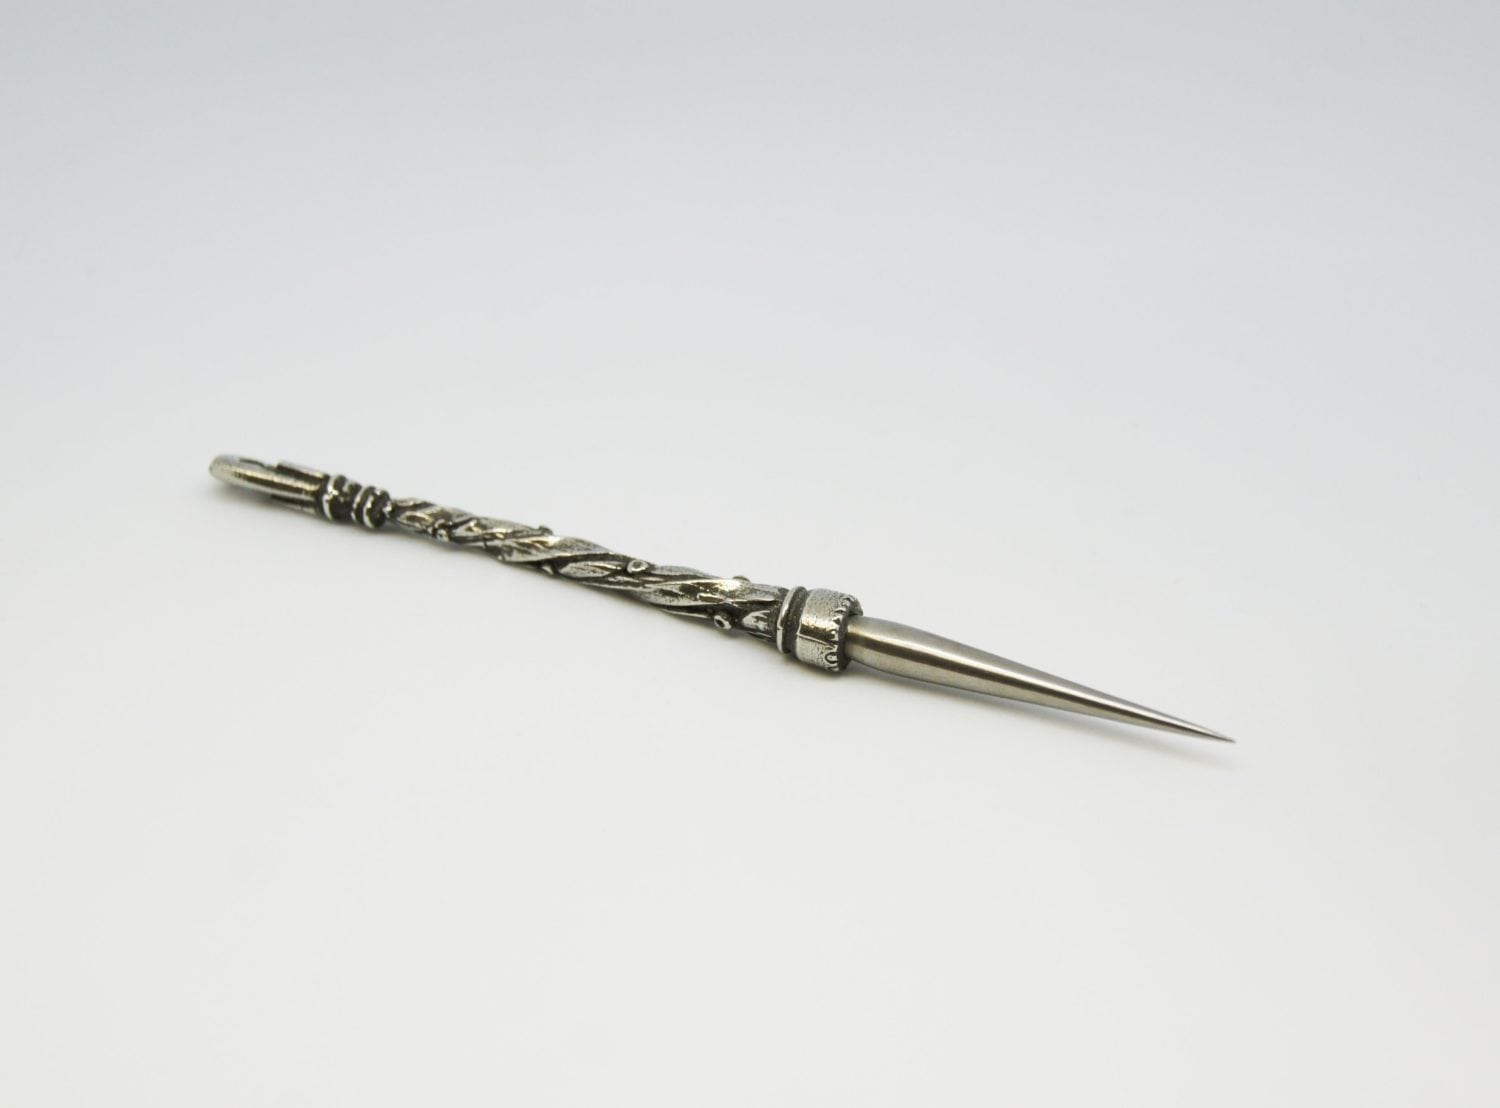 Victorian Style Needlework Accessories - Royal School of Needlework